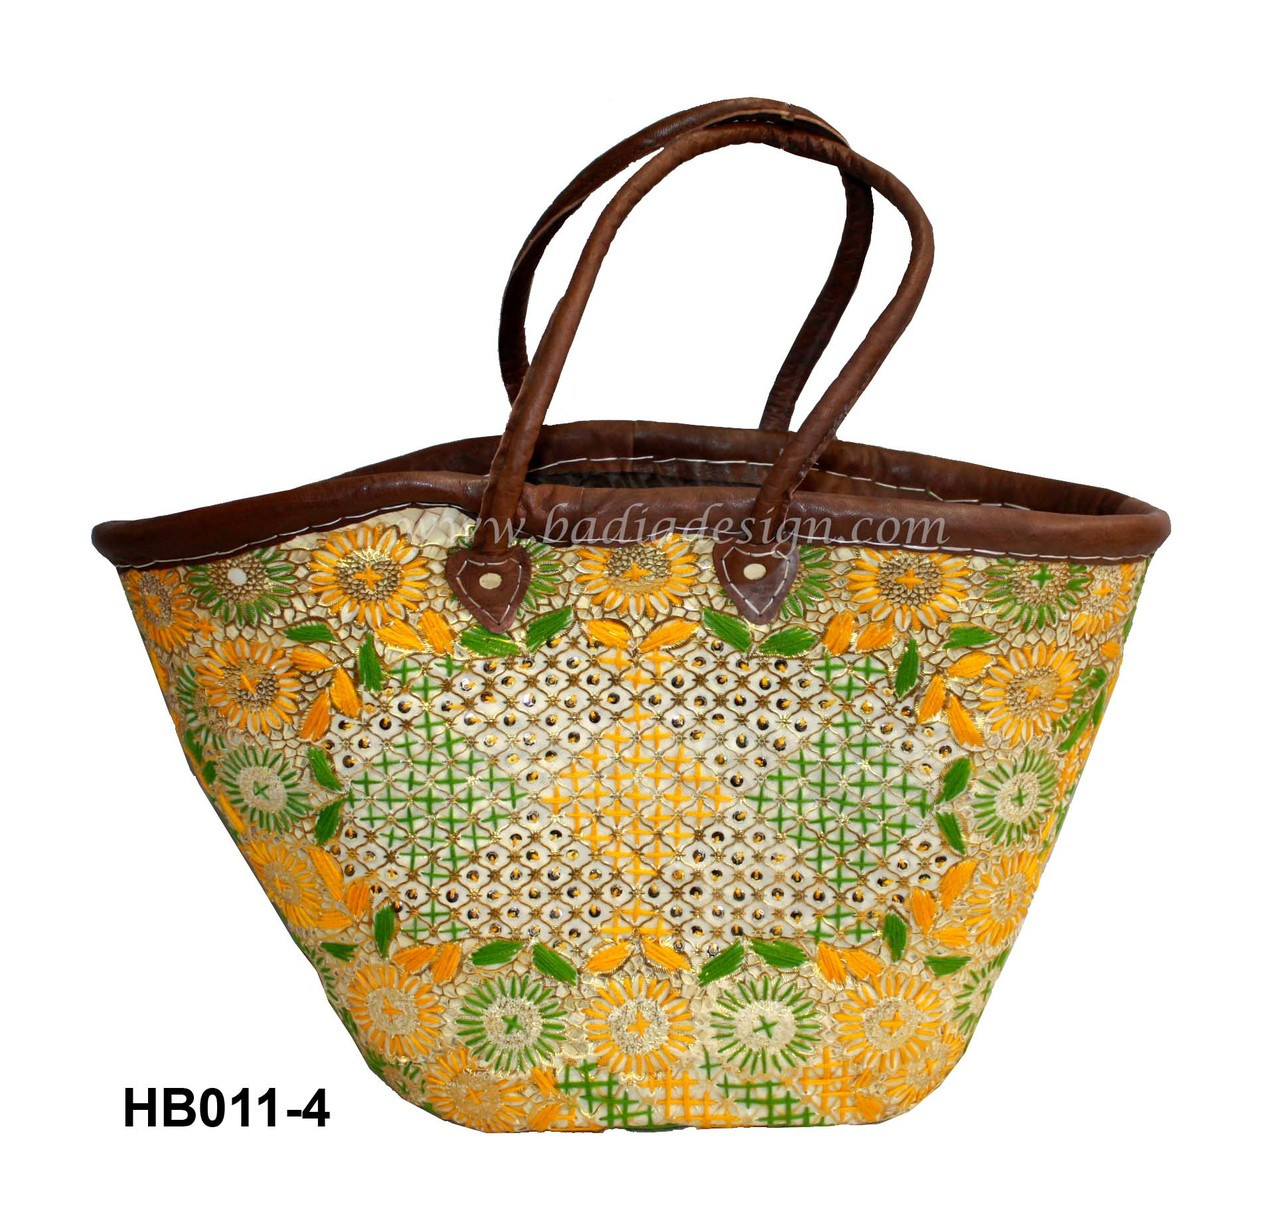 Straw Handbag with Leather Handle - HB011